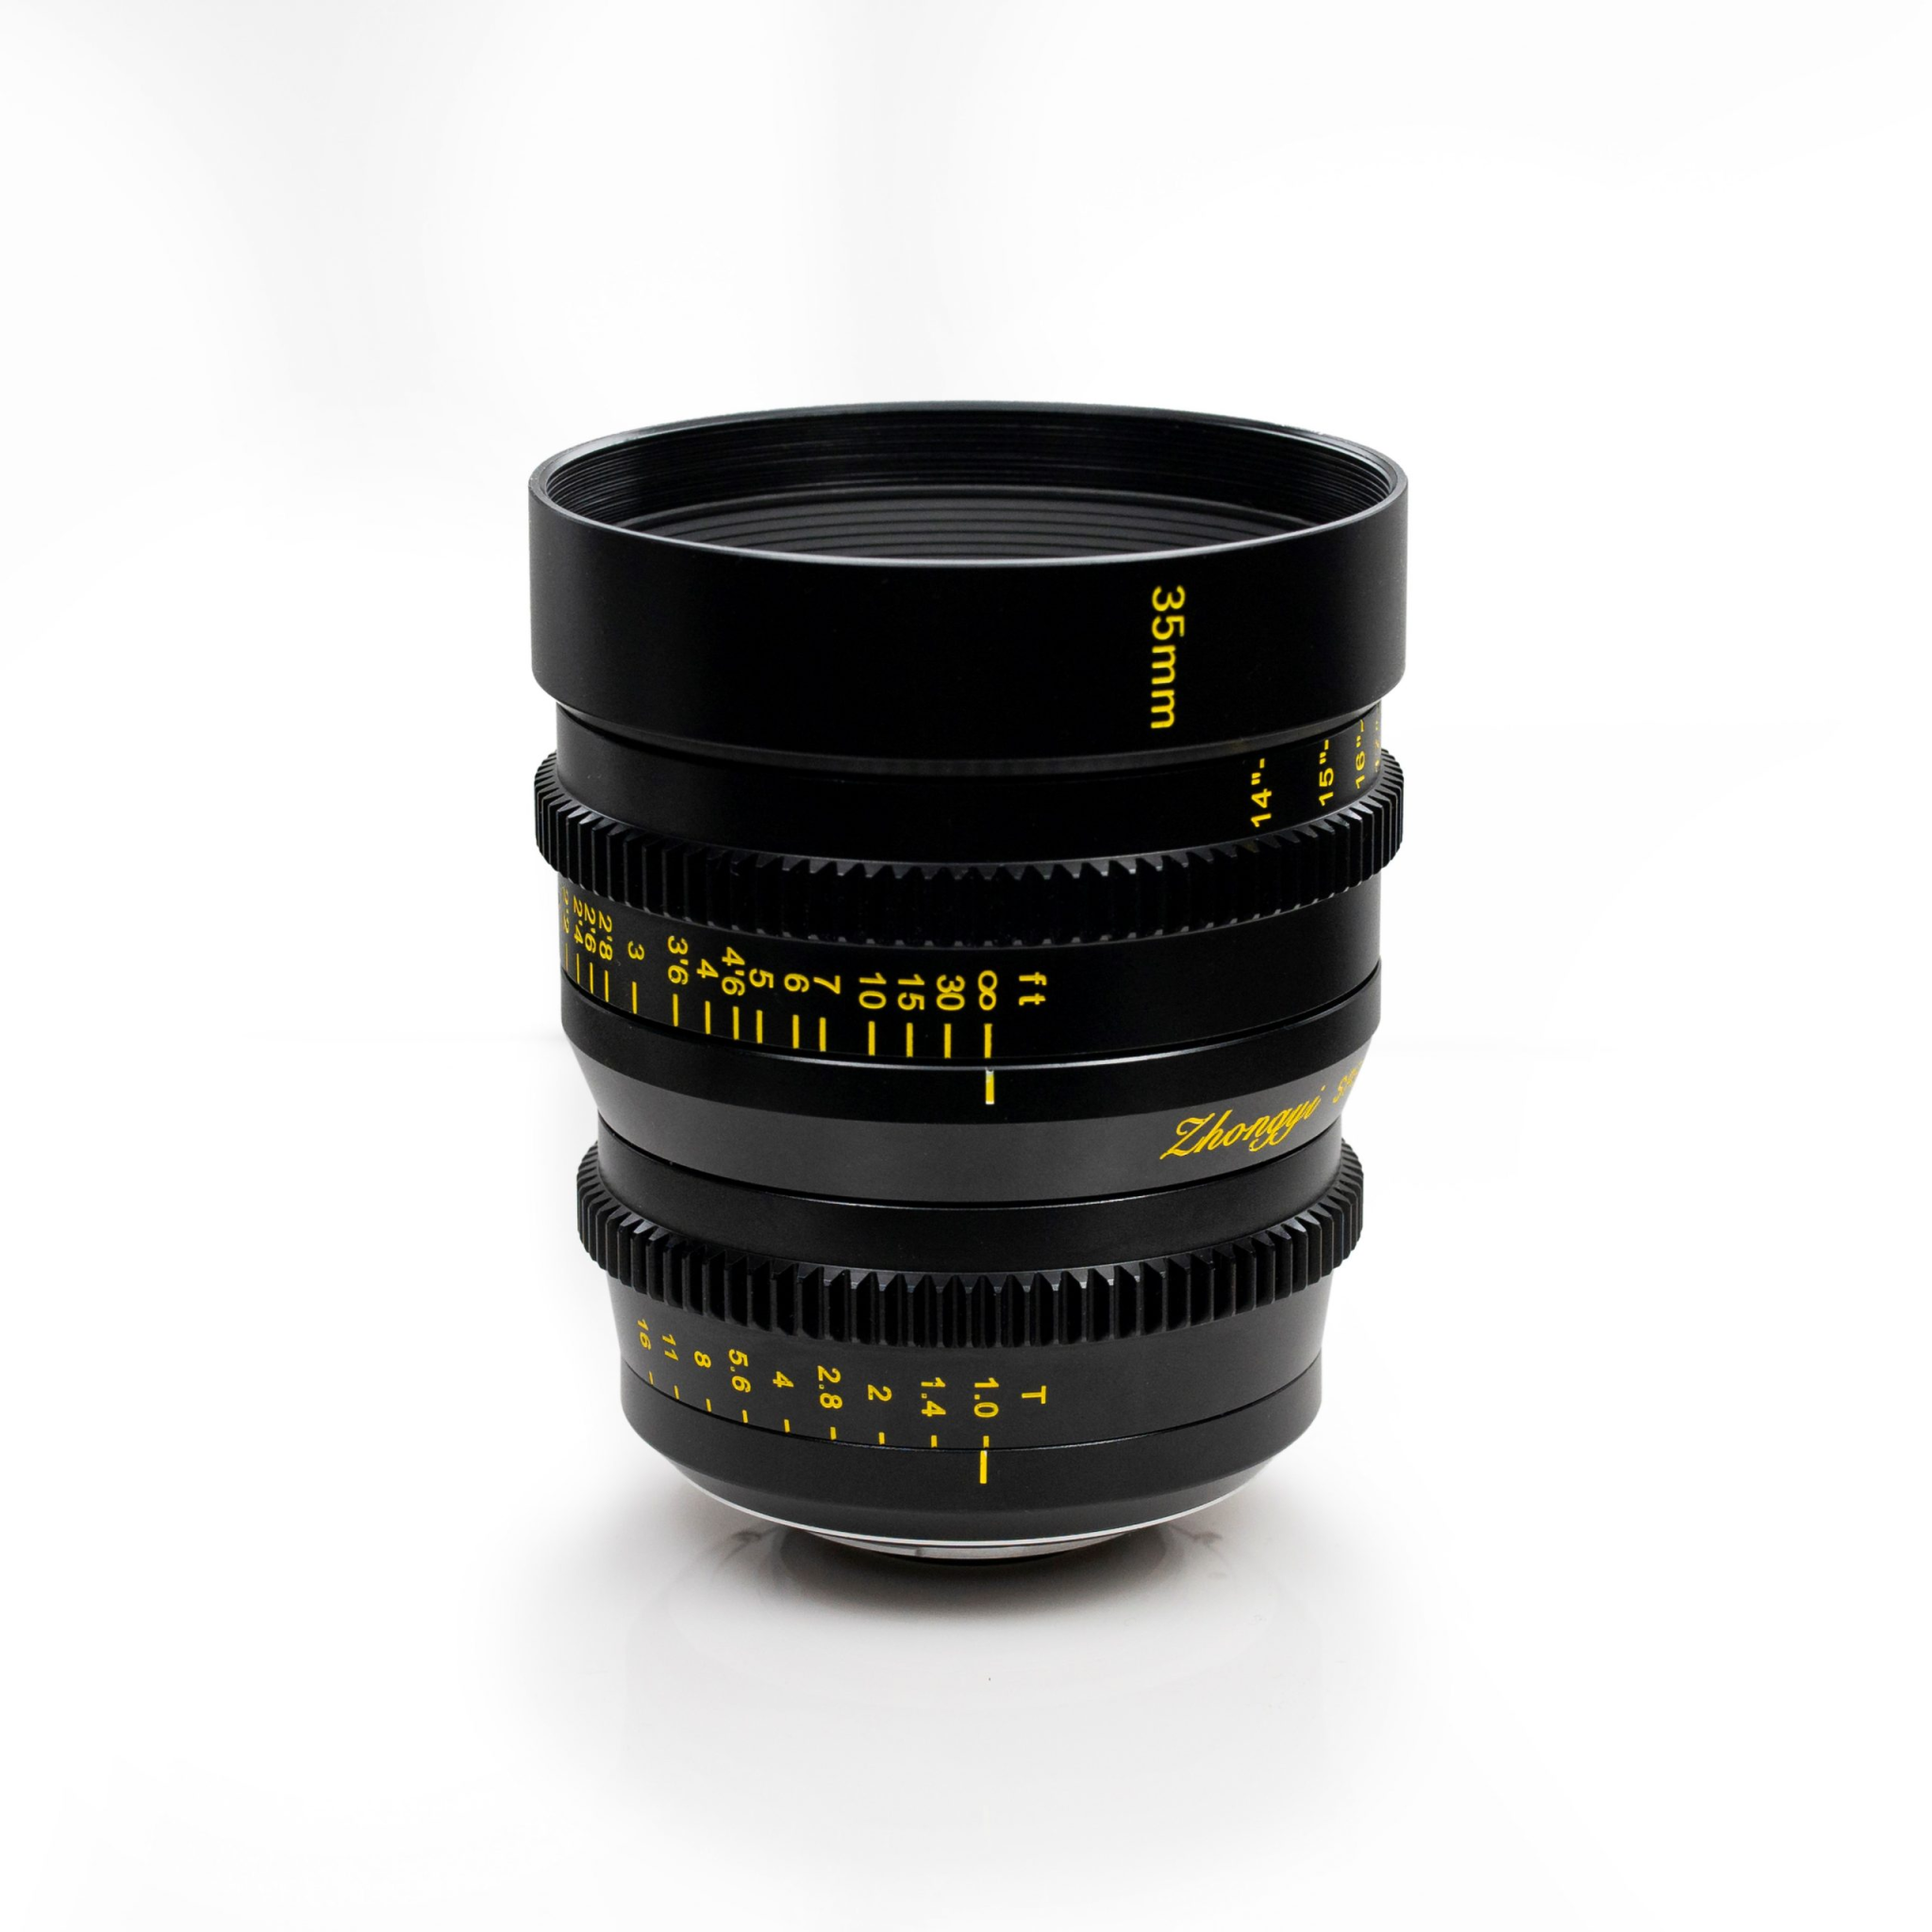 Mitakon Zhongyi Speedmaster 35mm T1.0 S35 Cine Lens for Micro Four Thirds